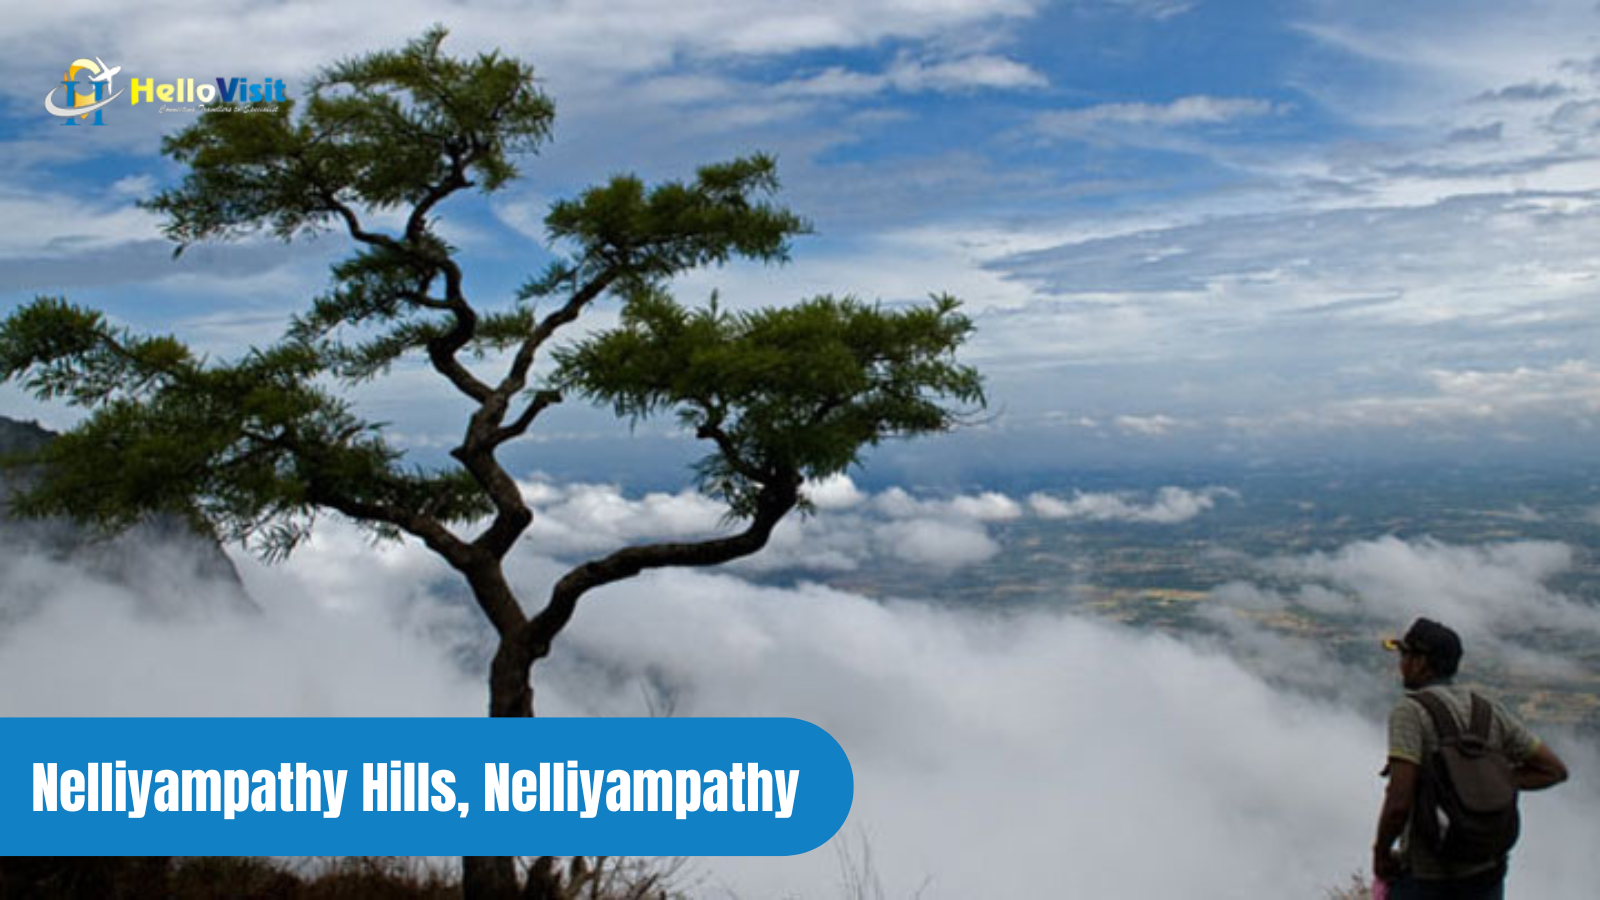 Nelliyampathy Hills, Nelliyampathy